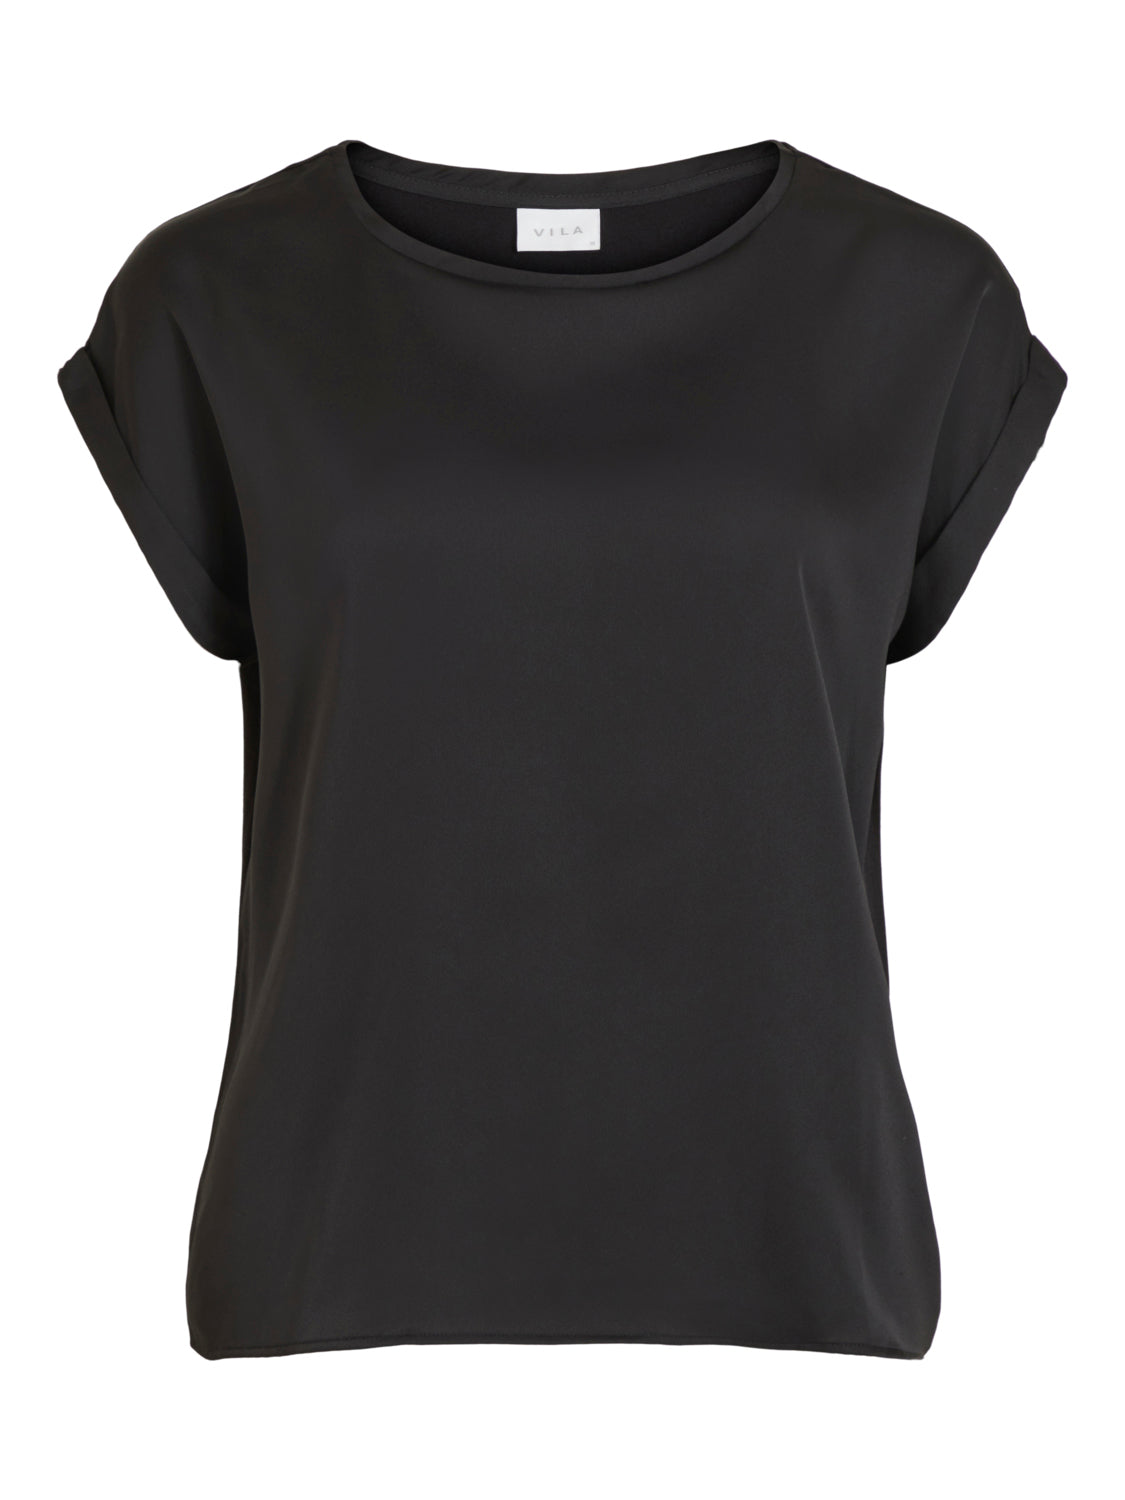 VIELLETTE T-shirts & Tops - Black